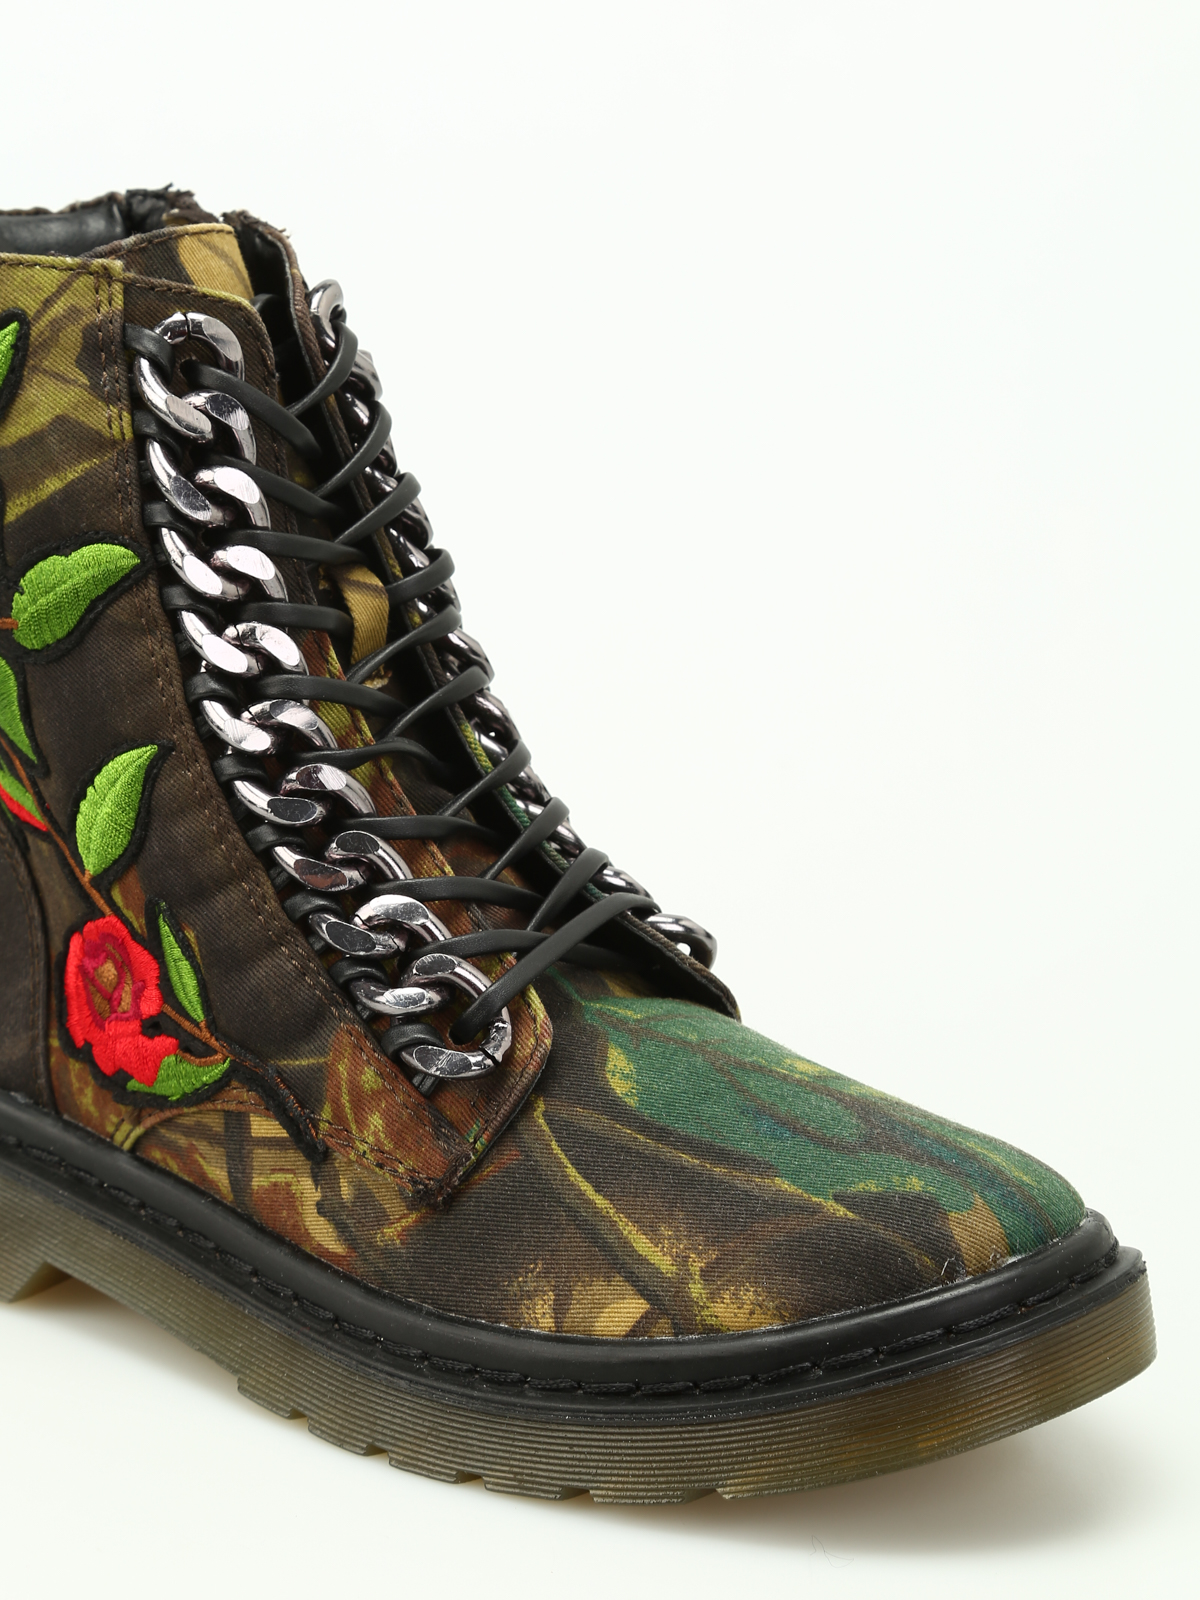 boots Steve Madden - Punkster embroidered combat boots - PUNKSTERCAMOMULTI